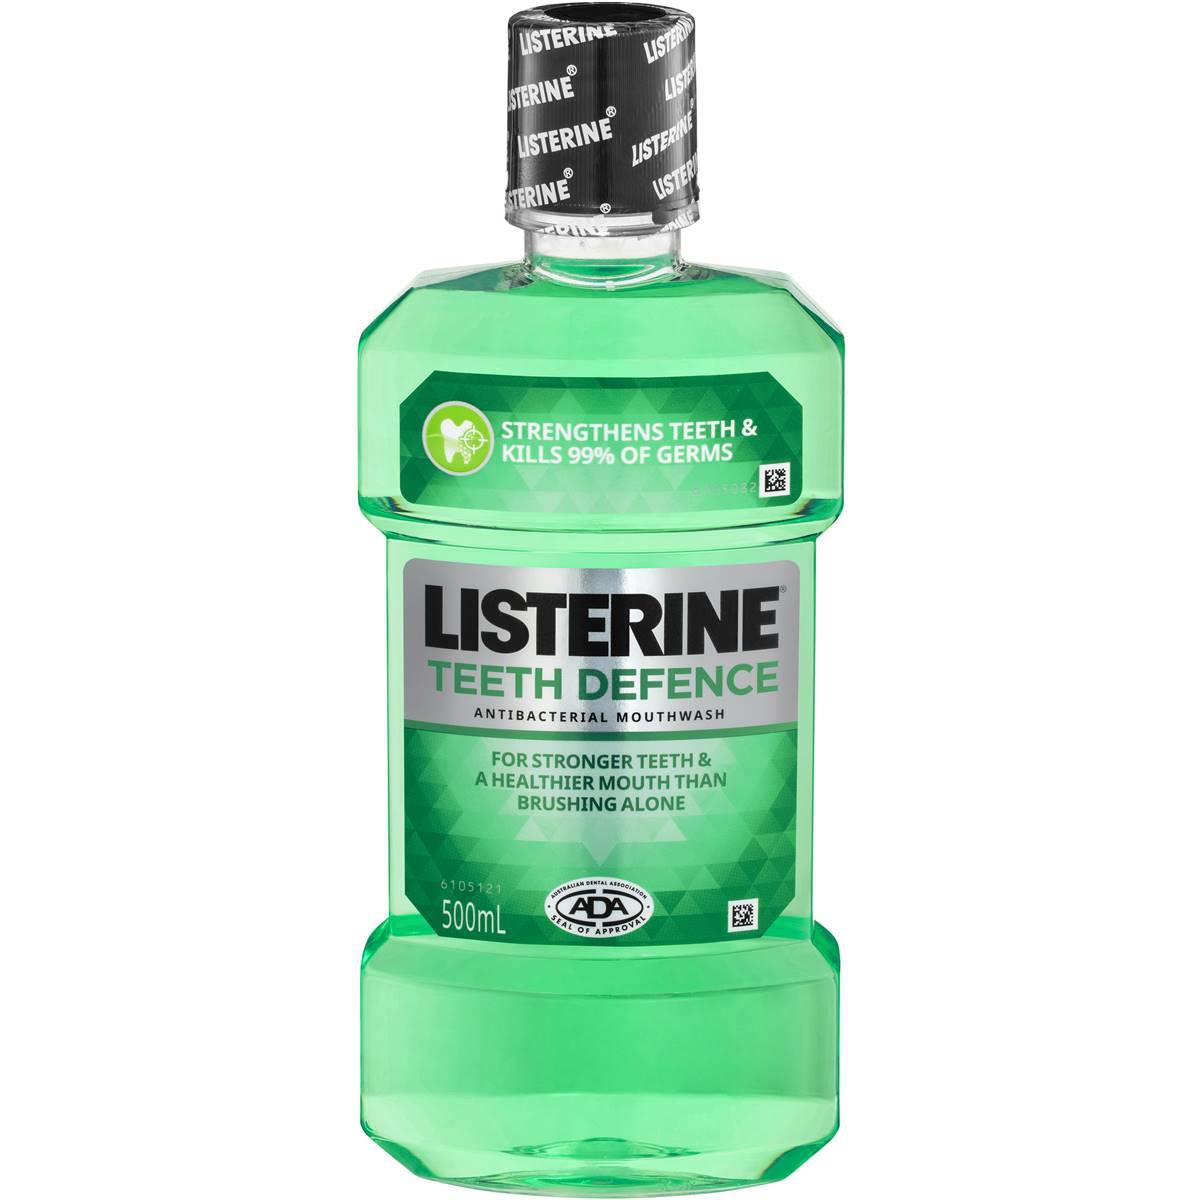 Listerine Teeth Defence Antibacterial Mouthwash 500ml